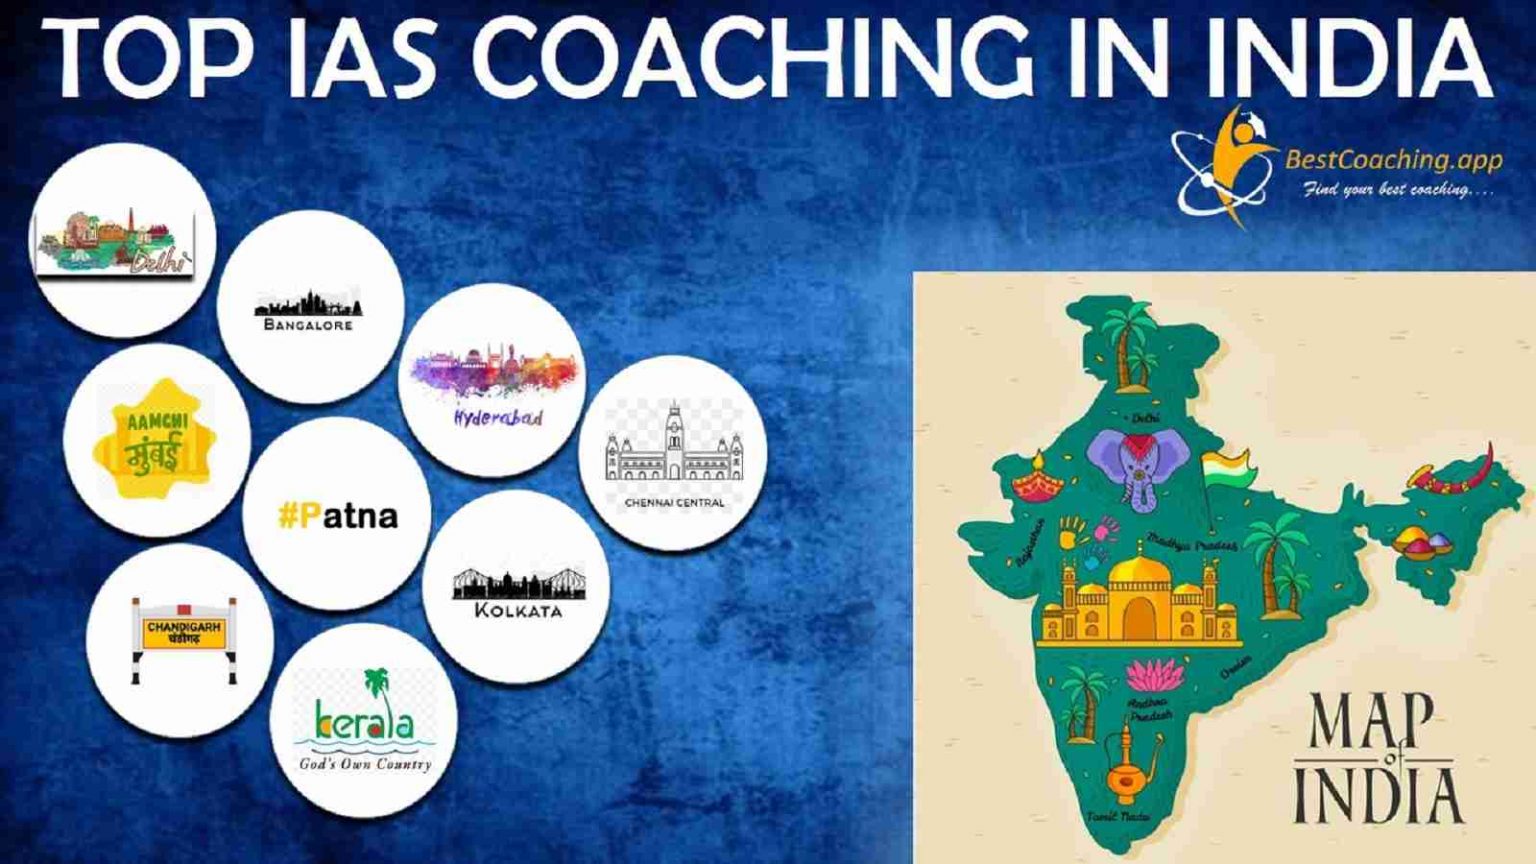 Top 10 IAS Coaching Institutes In India | List Updated